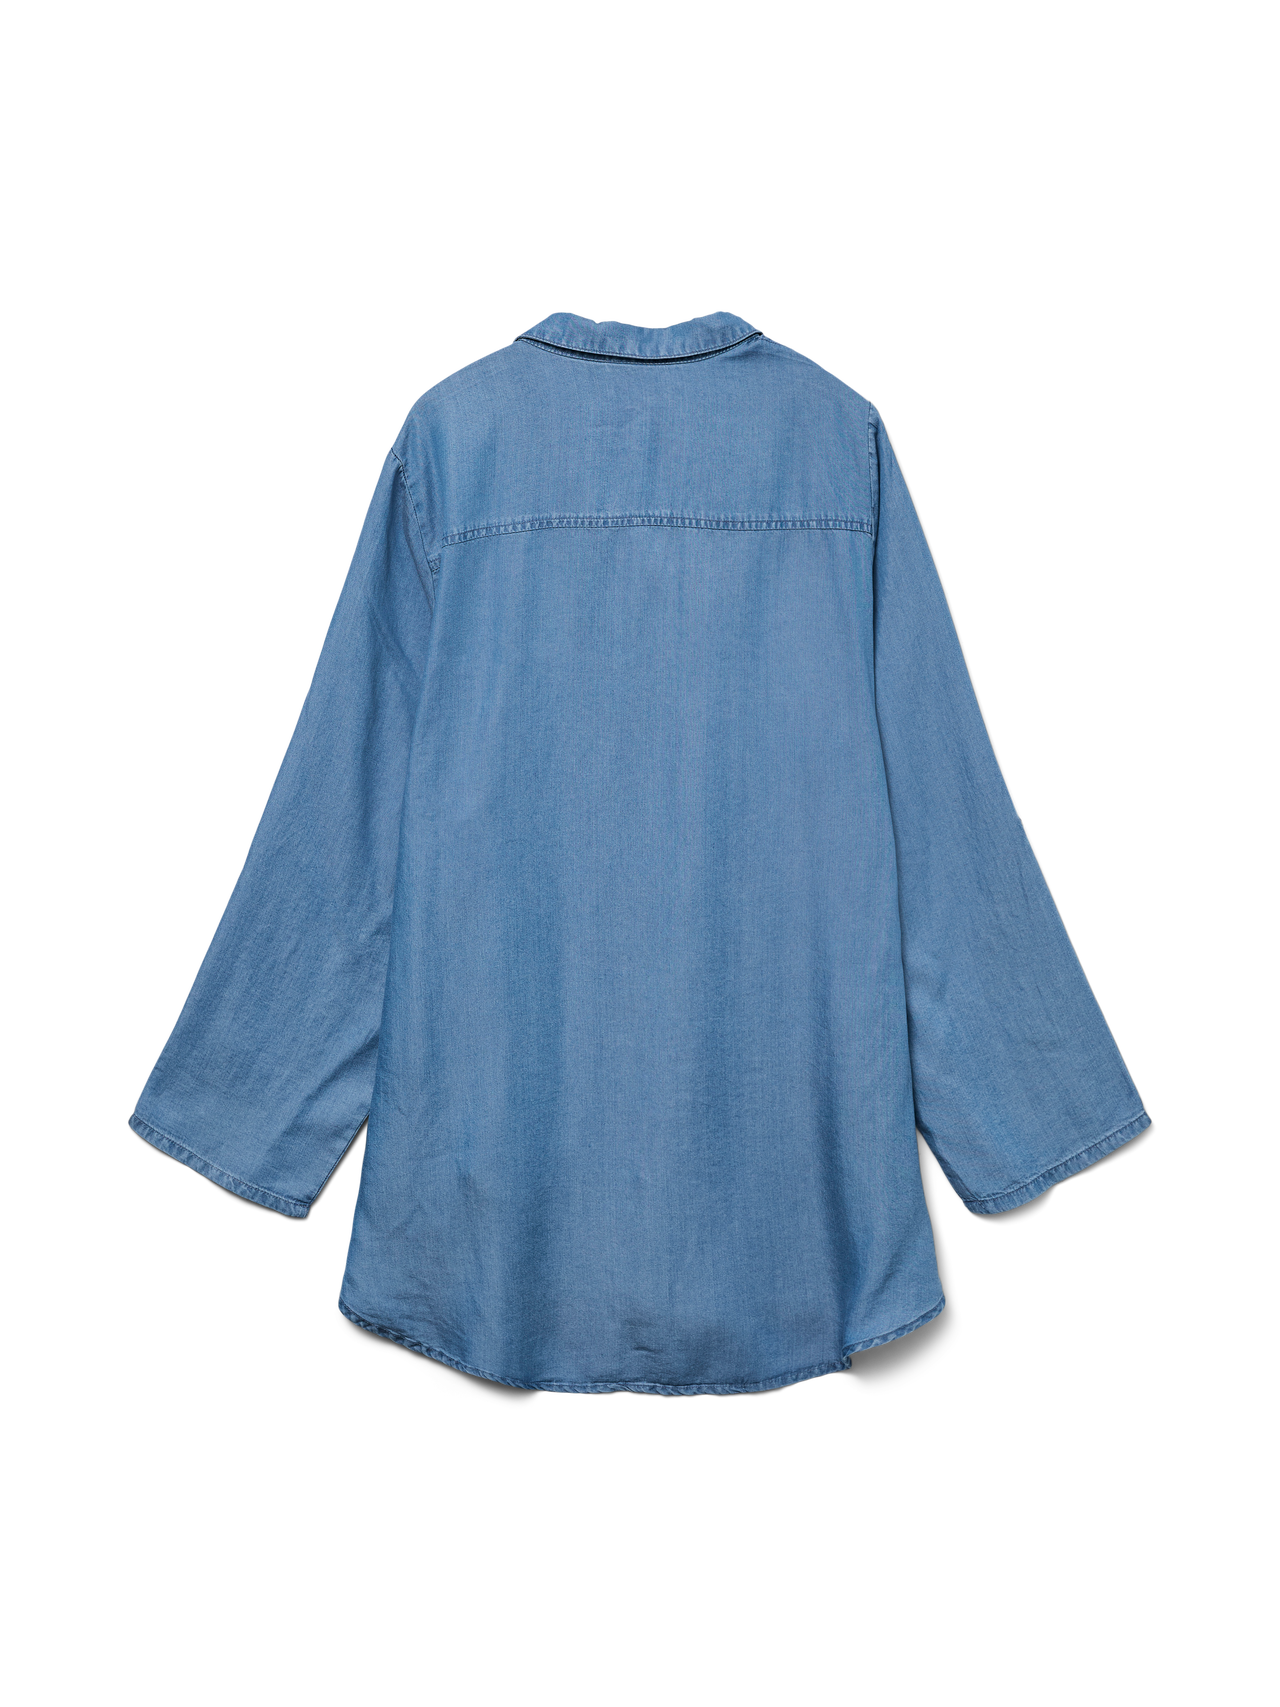 Vero Moda VMCBREE Overhemd -Medium Blue Denim - 10305624